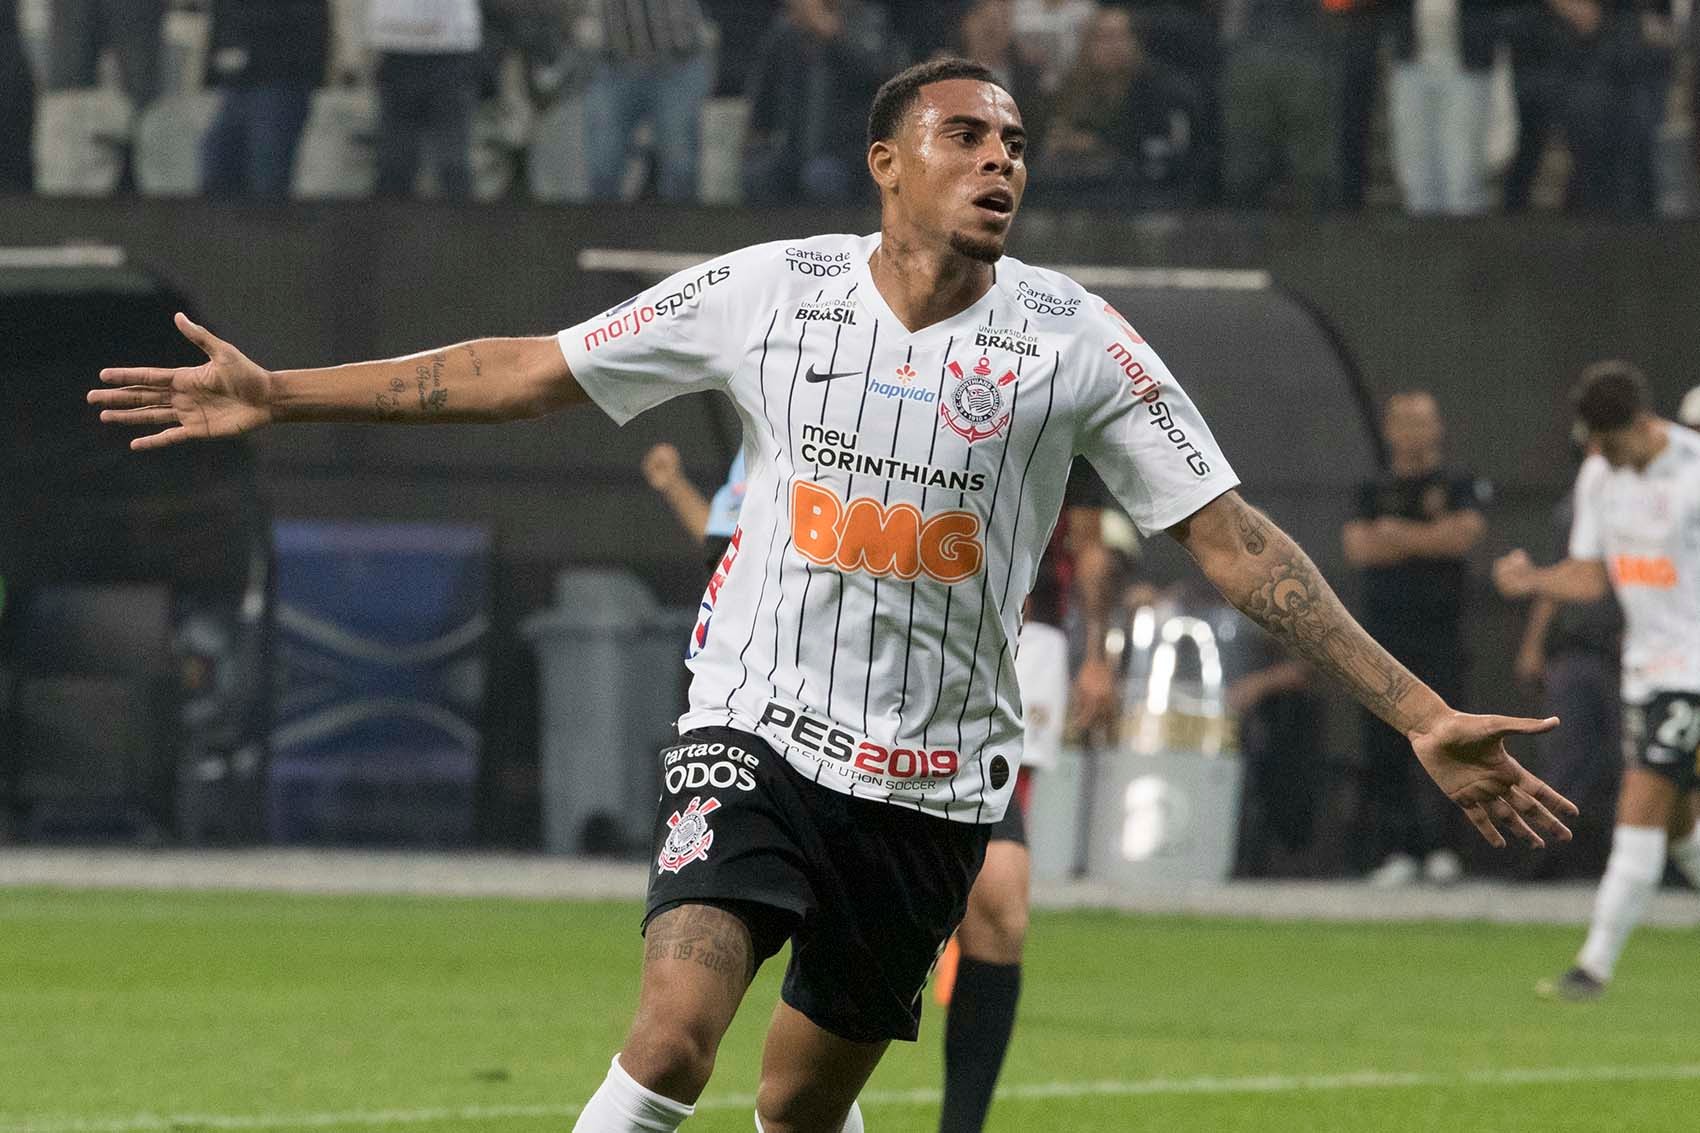 2019 - Artilheiro: Gustagol - 14 gols